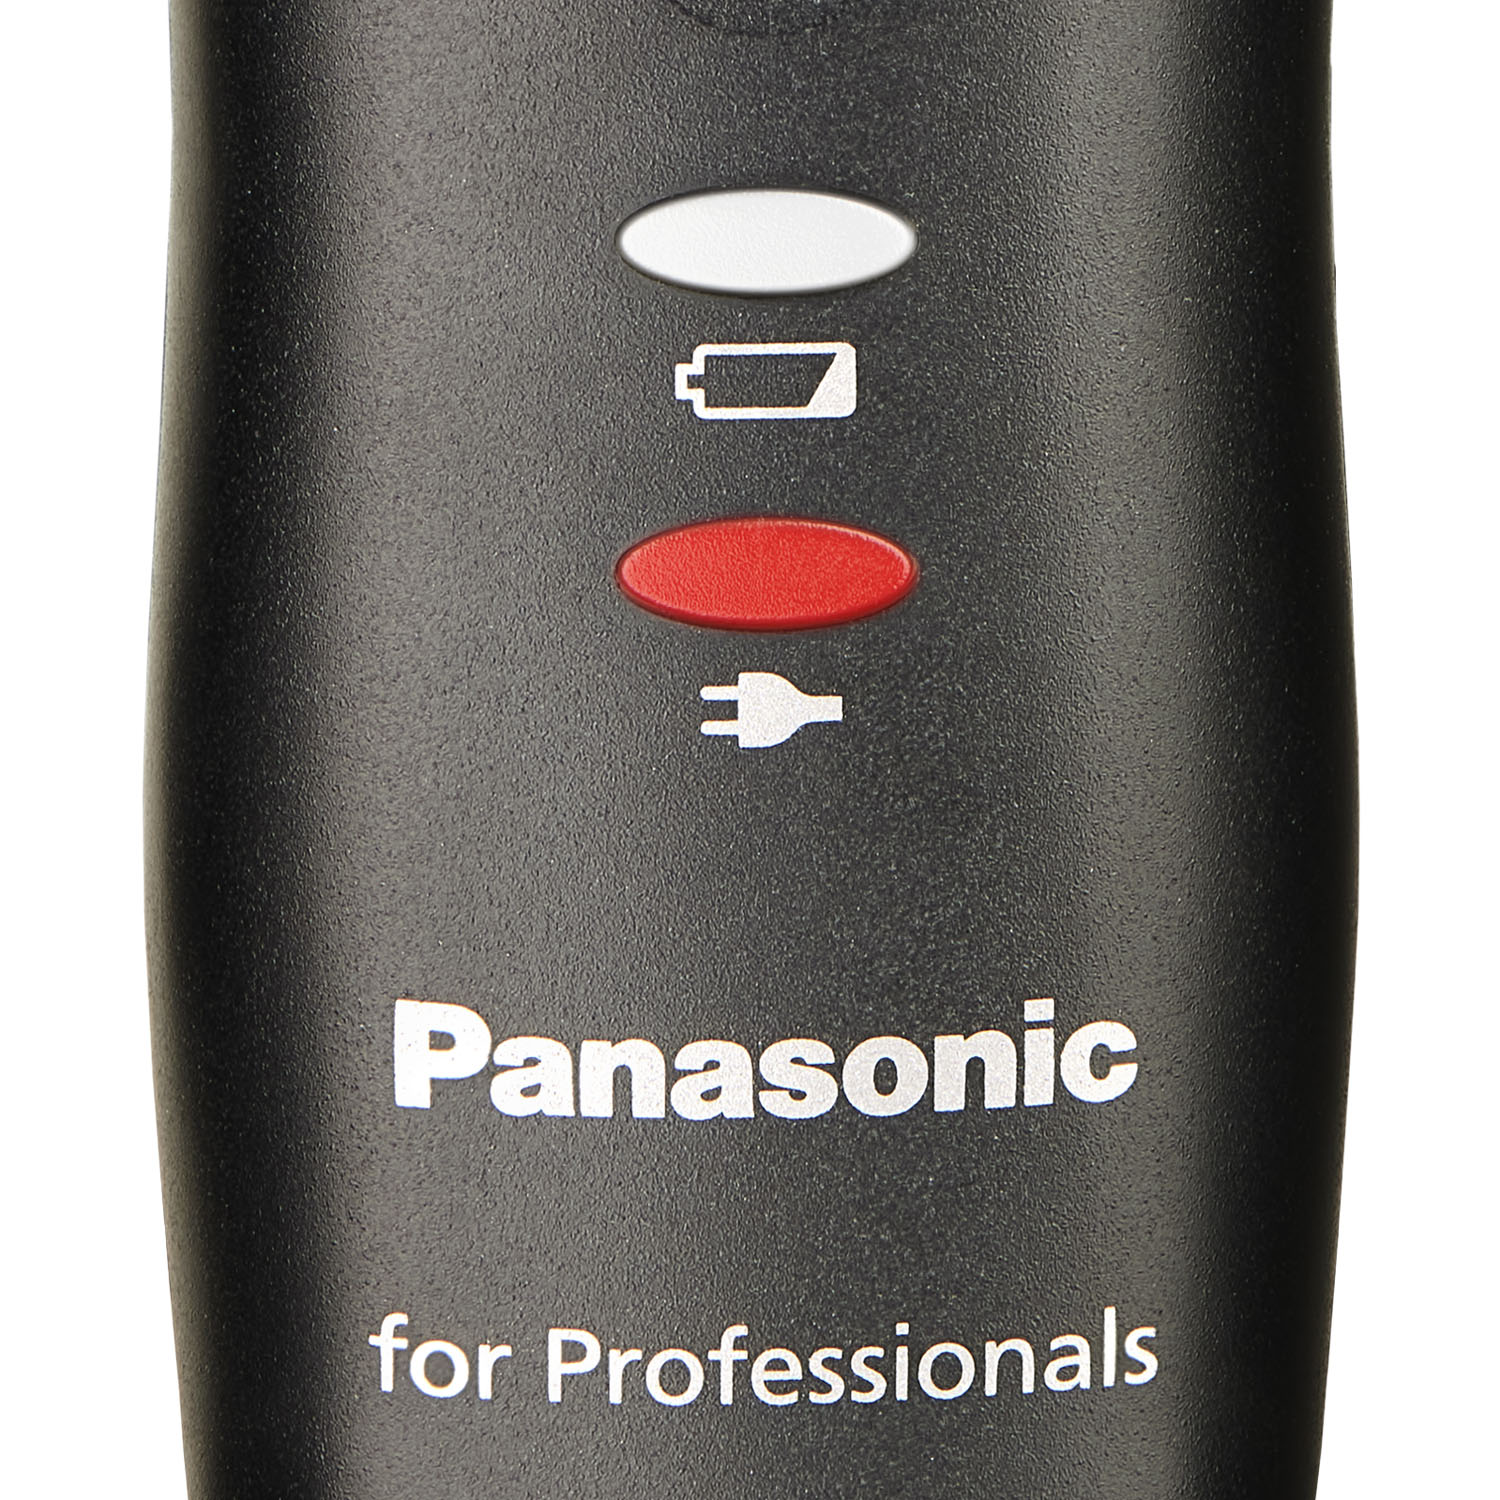  Panasonic ER-DGP84 